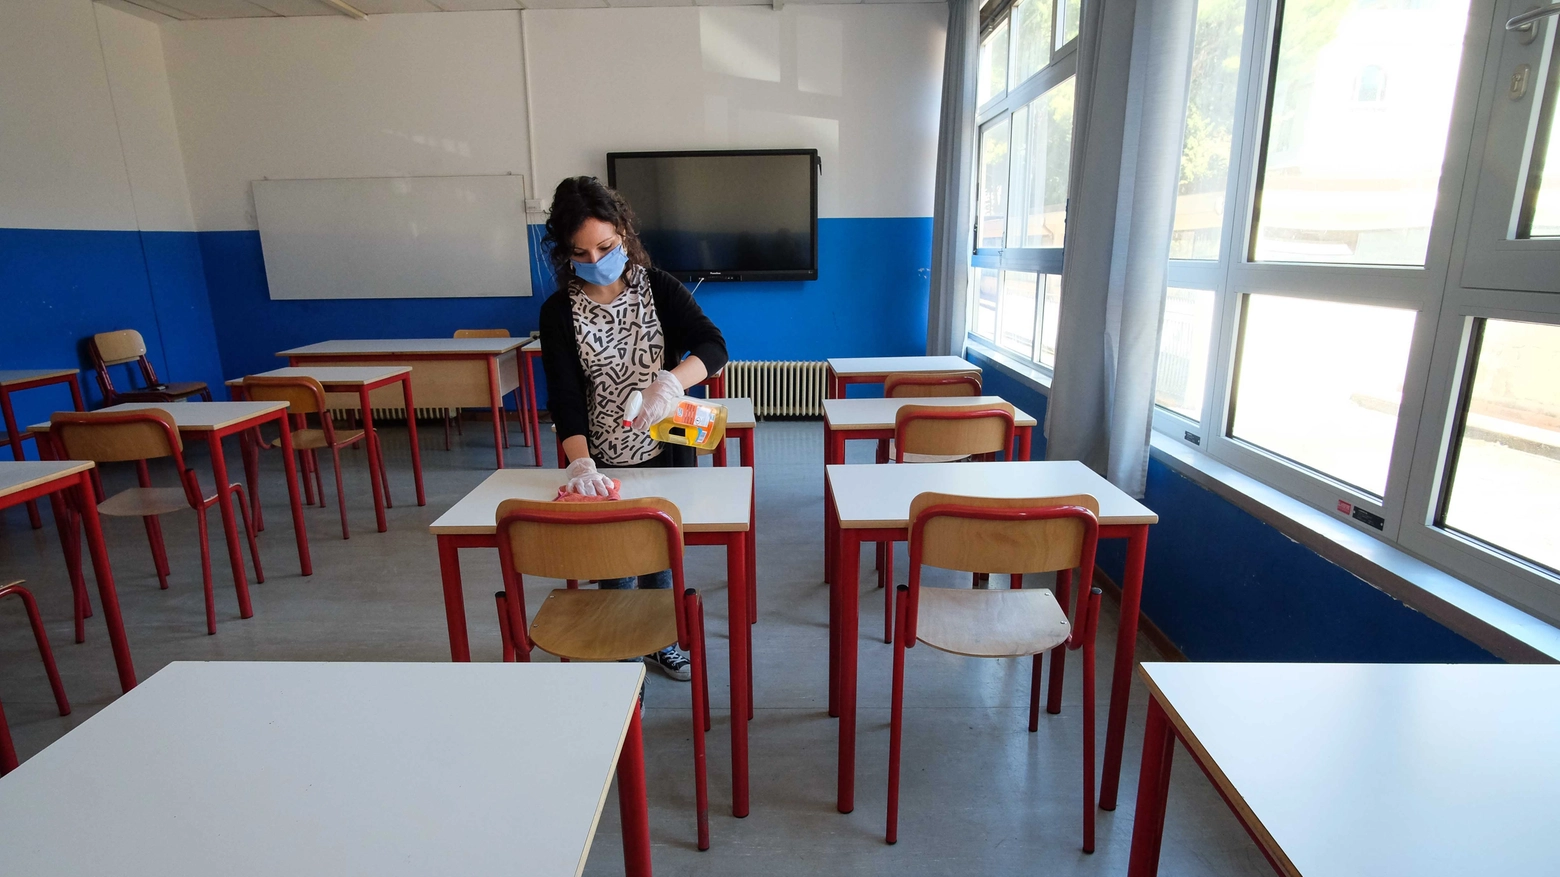 Banchi vuoti in classe